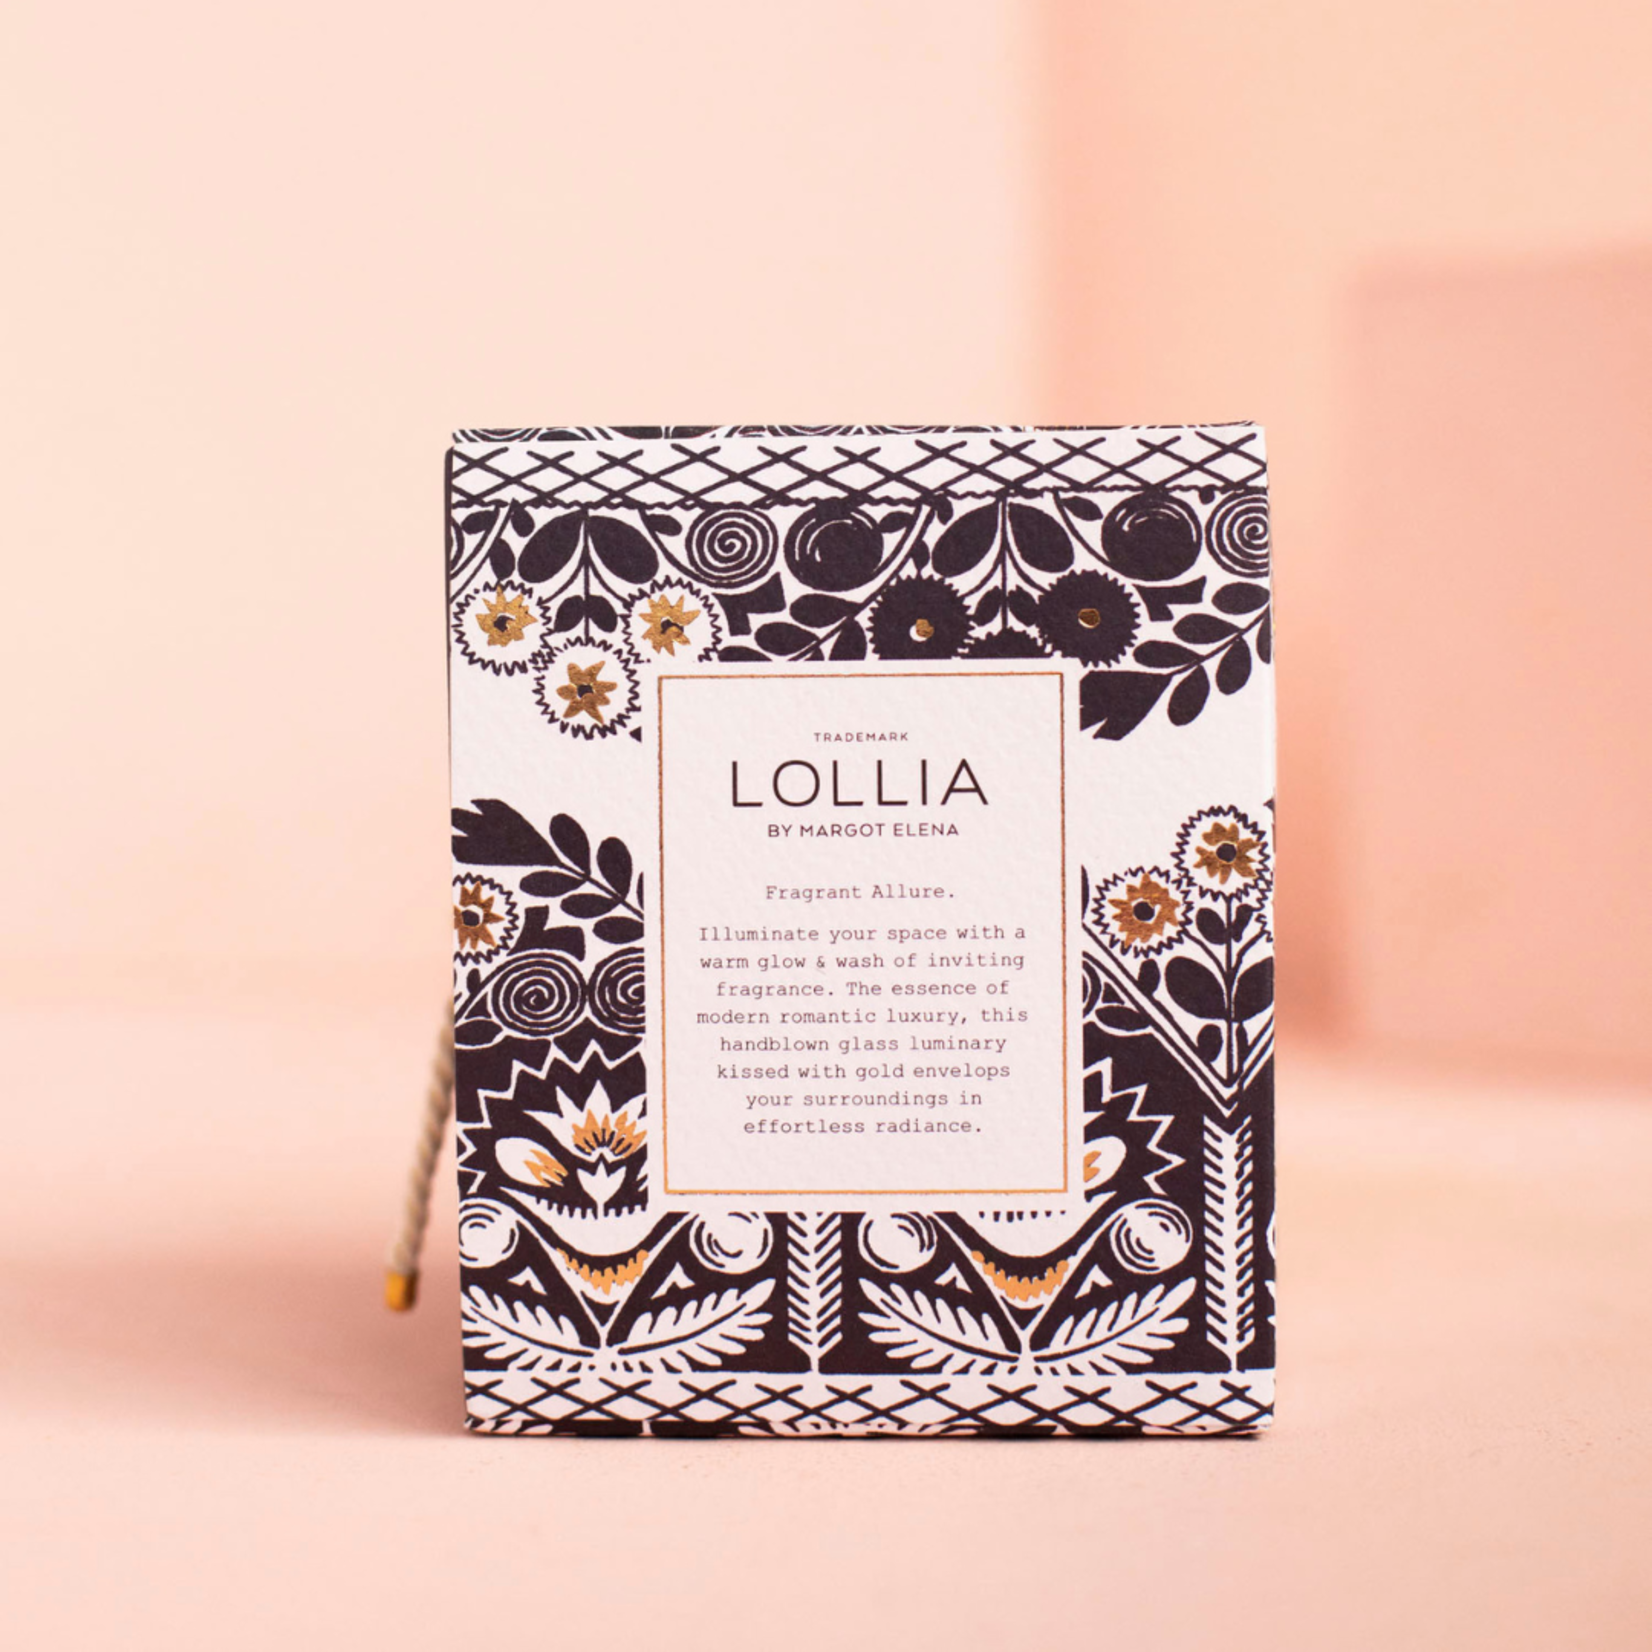 Lollia Dream Boxed Perfumed Luminary